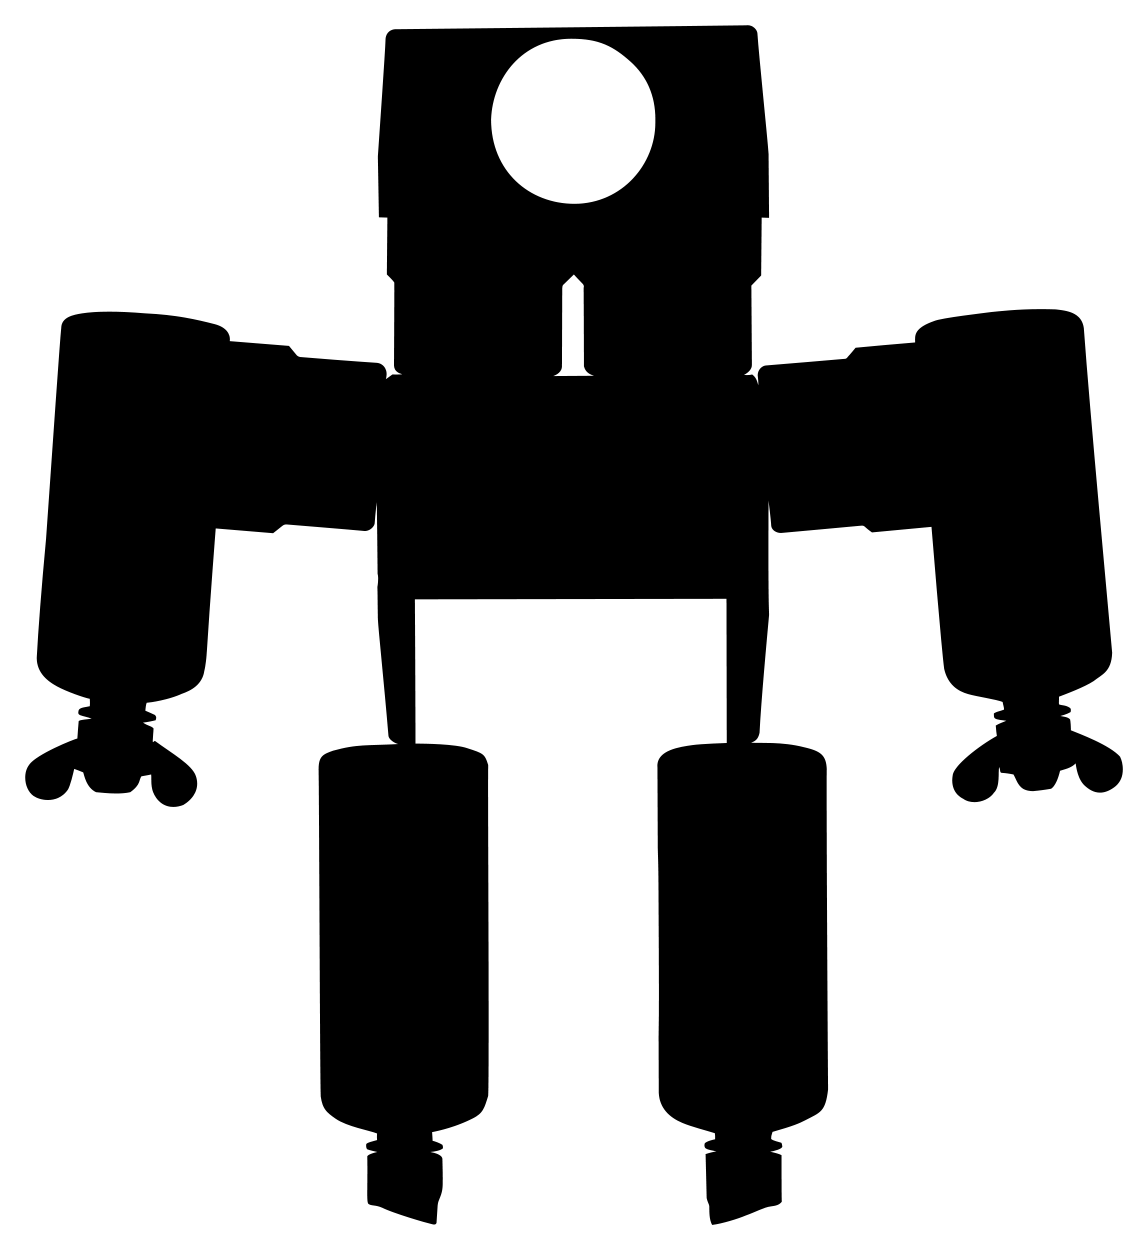 Biotrue Solution (2 pack) BoxBot silhouette